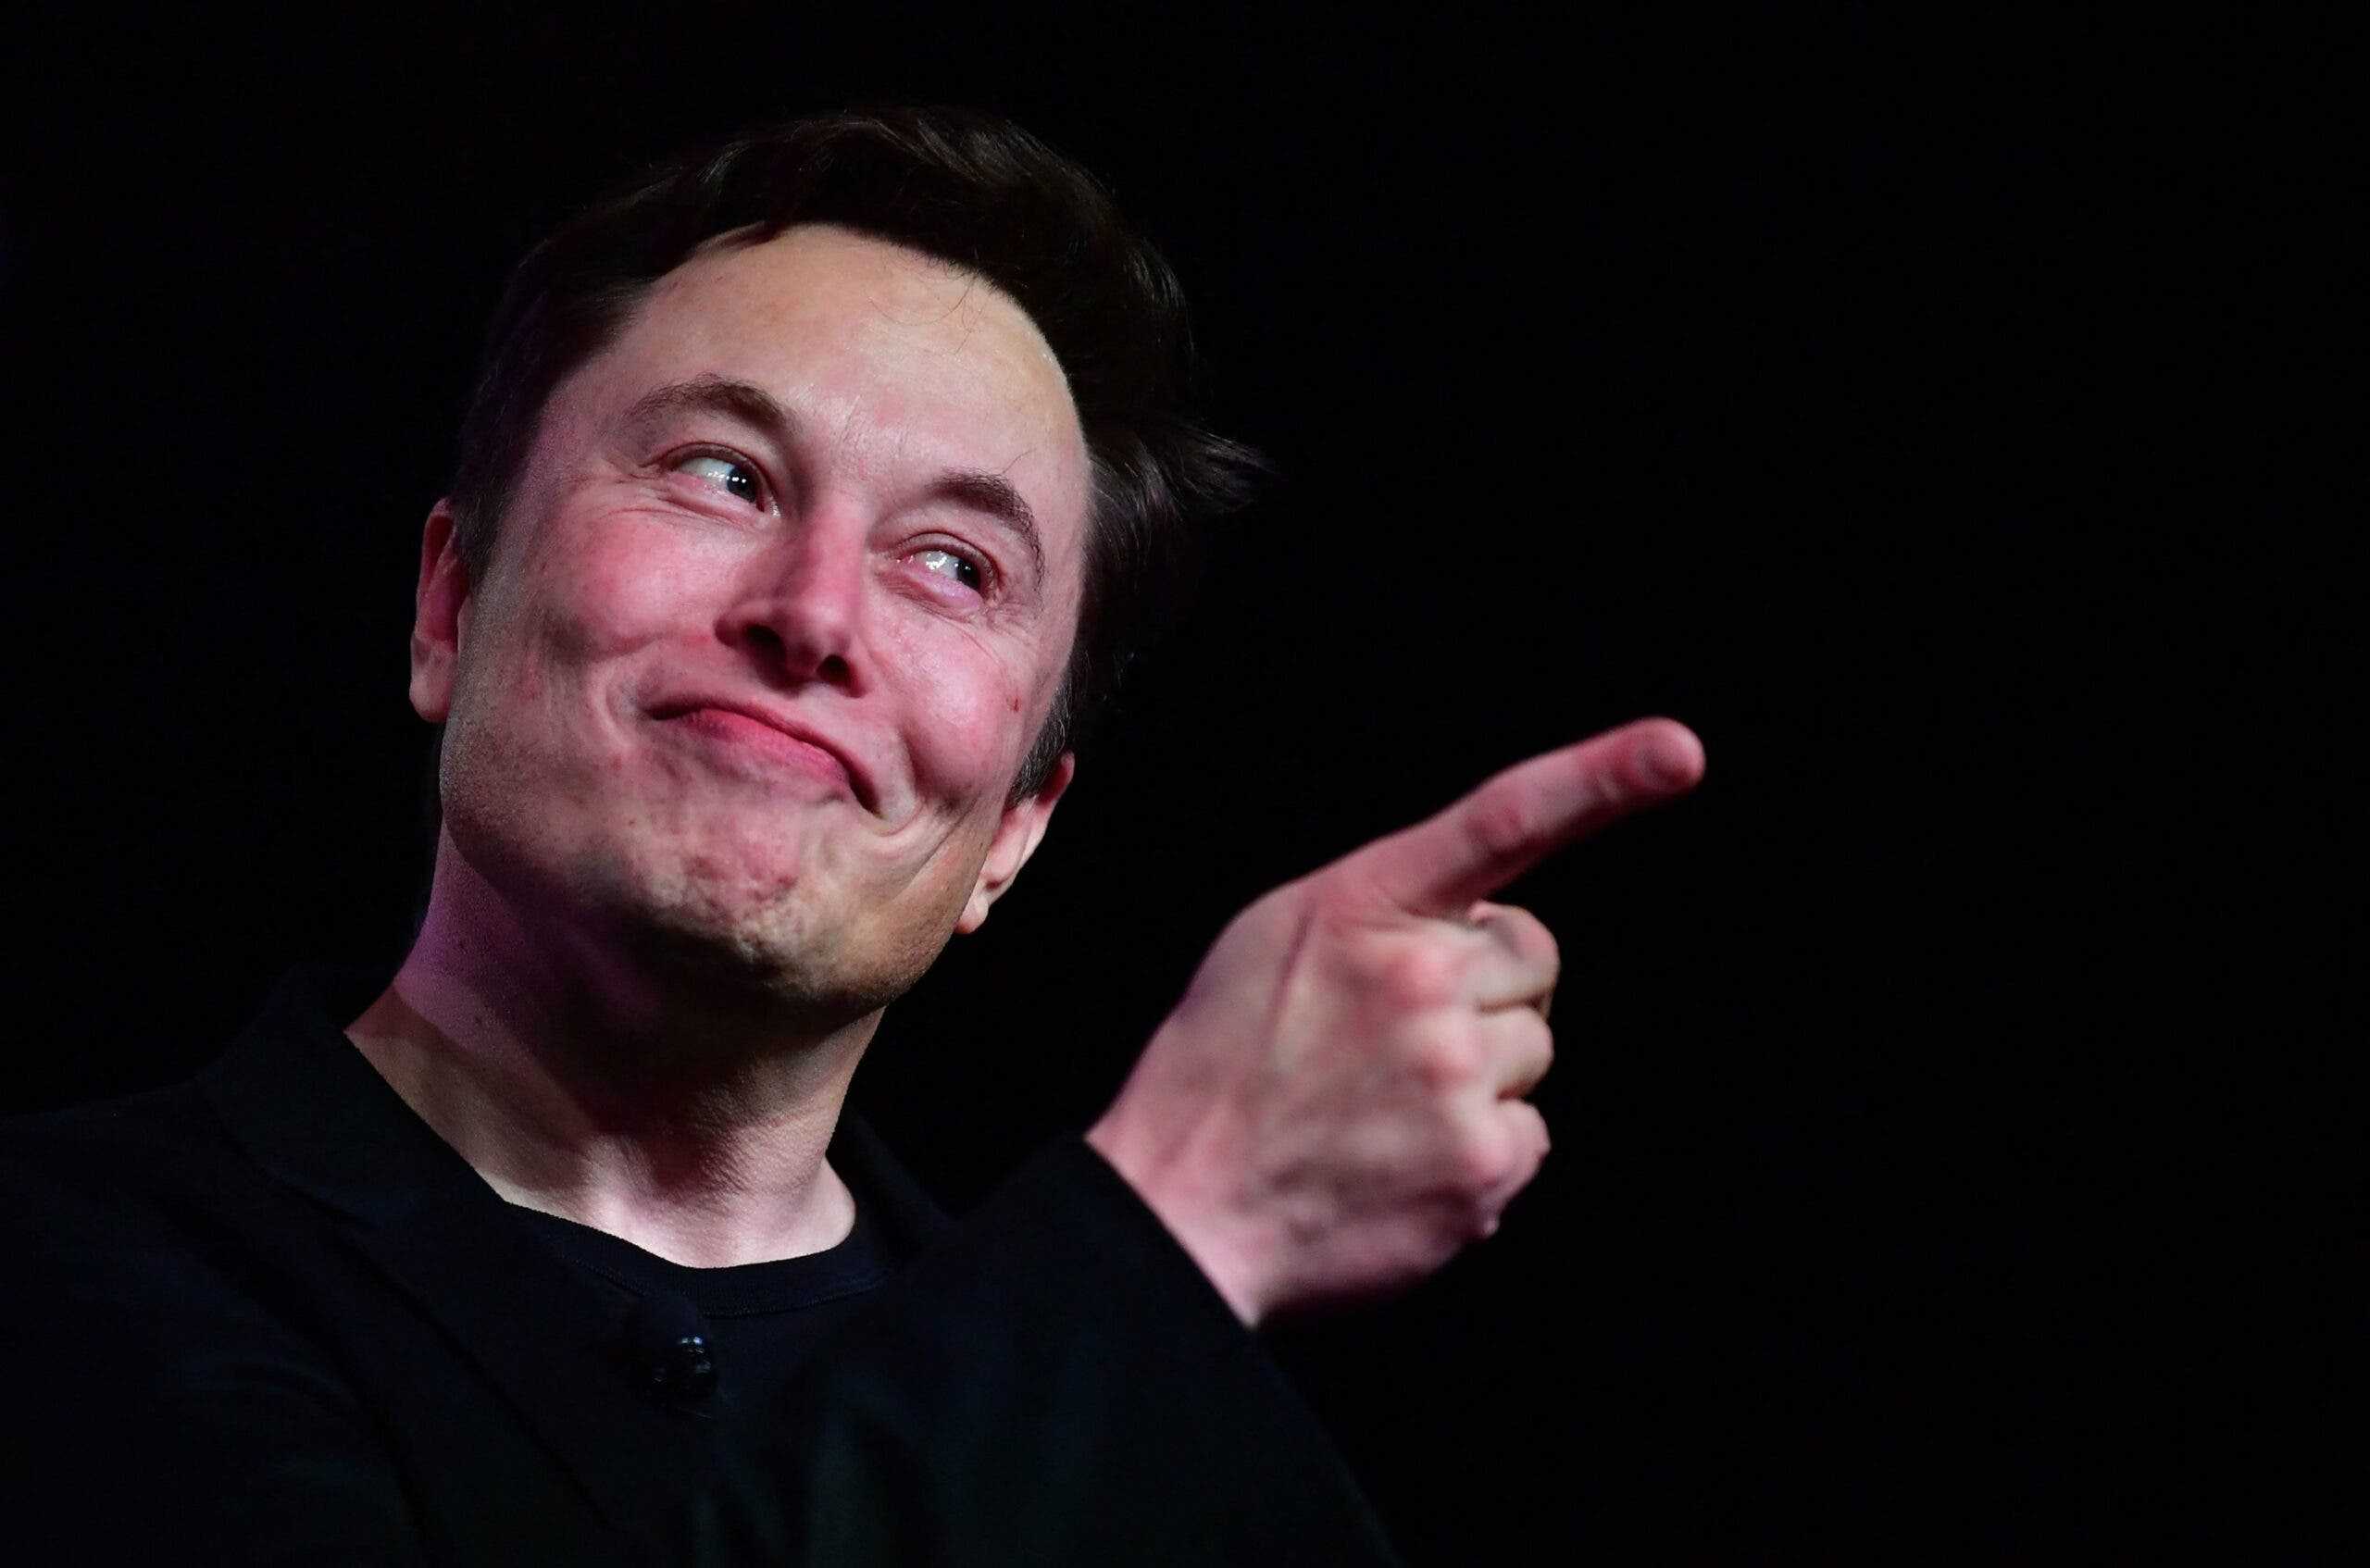 Chip cerebral de Elon Musk